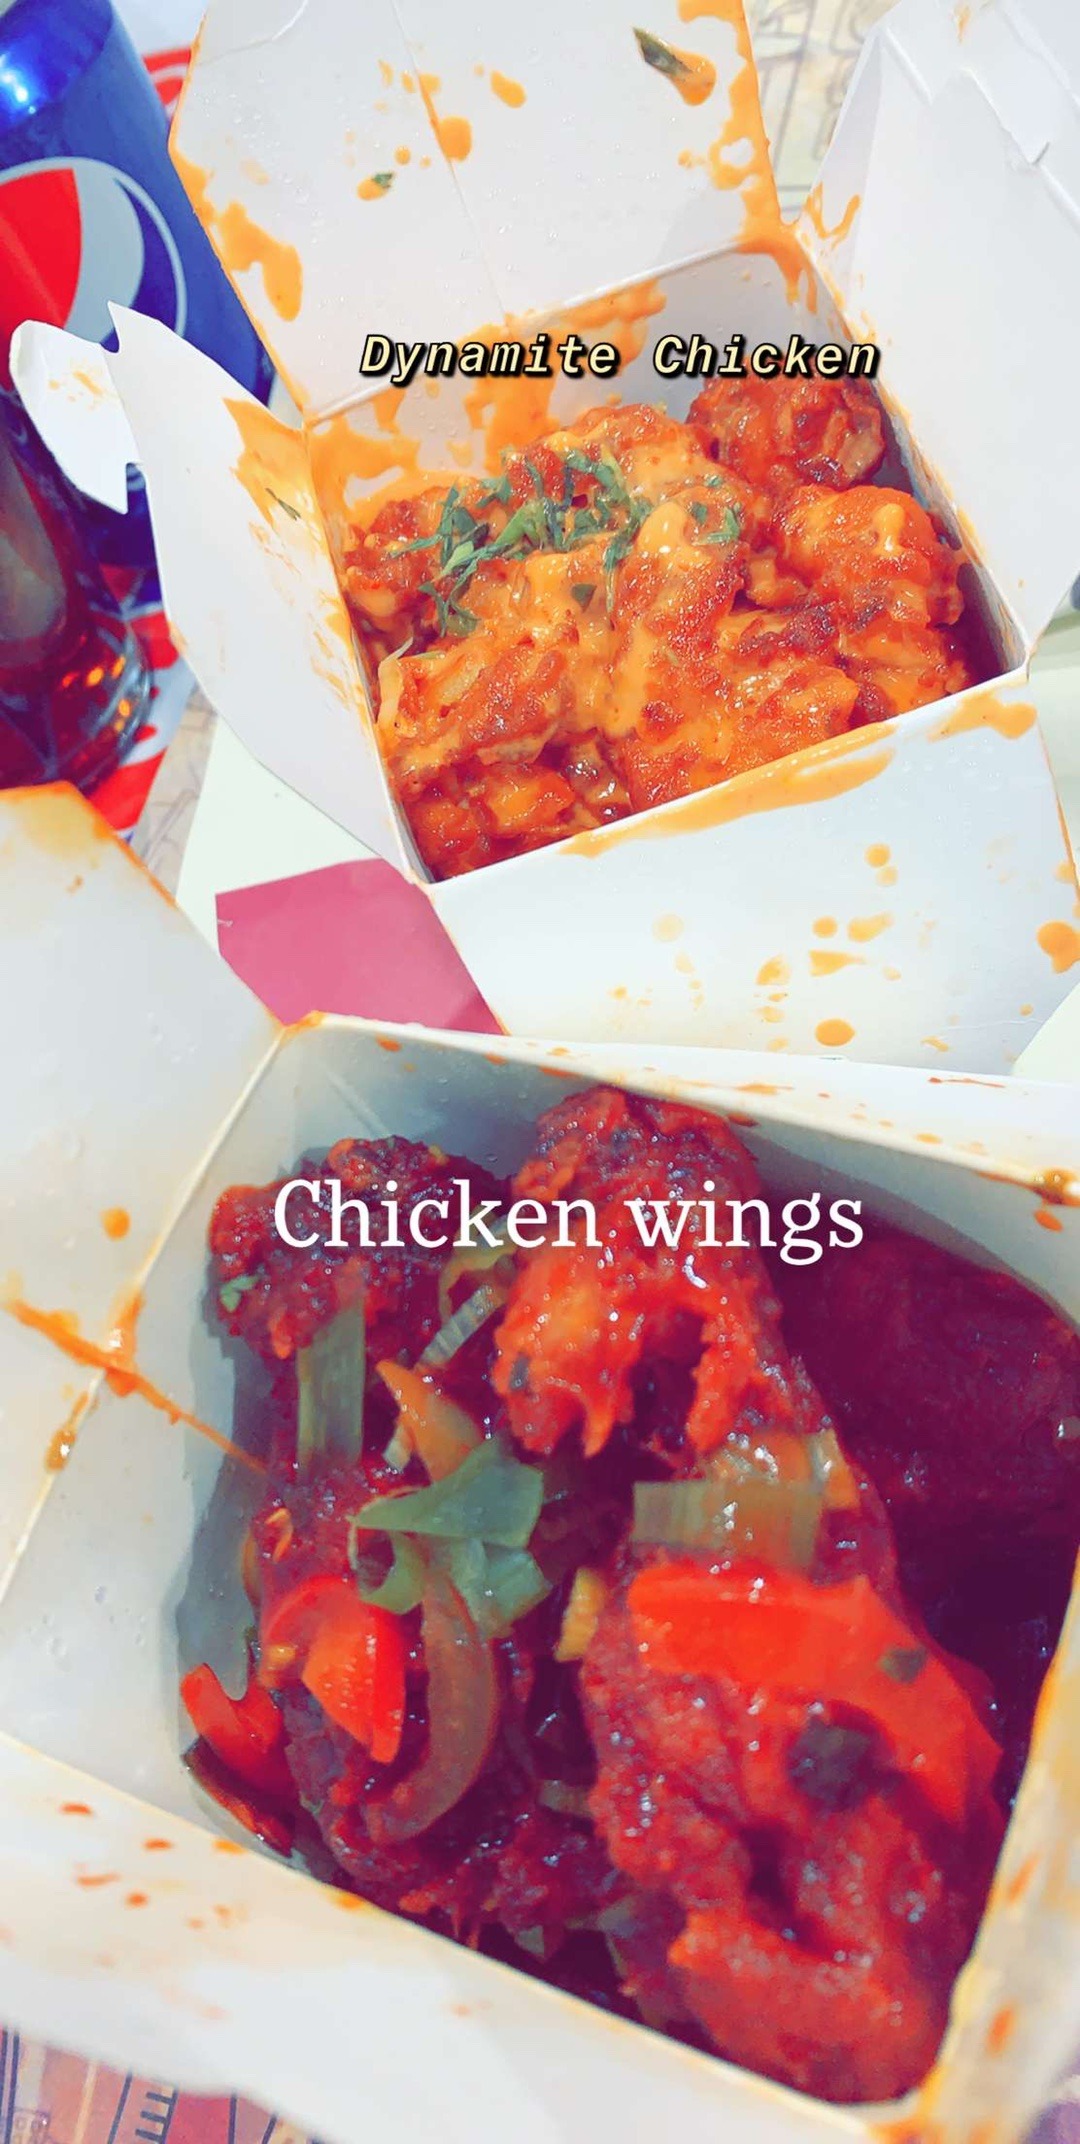 Chicken wings 🧡 @ بوكس ات - البحرين